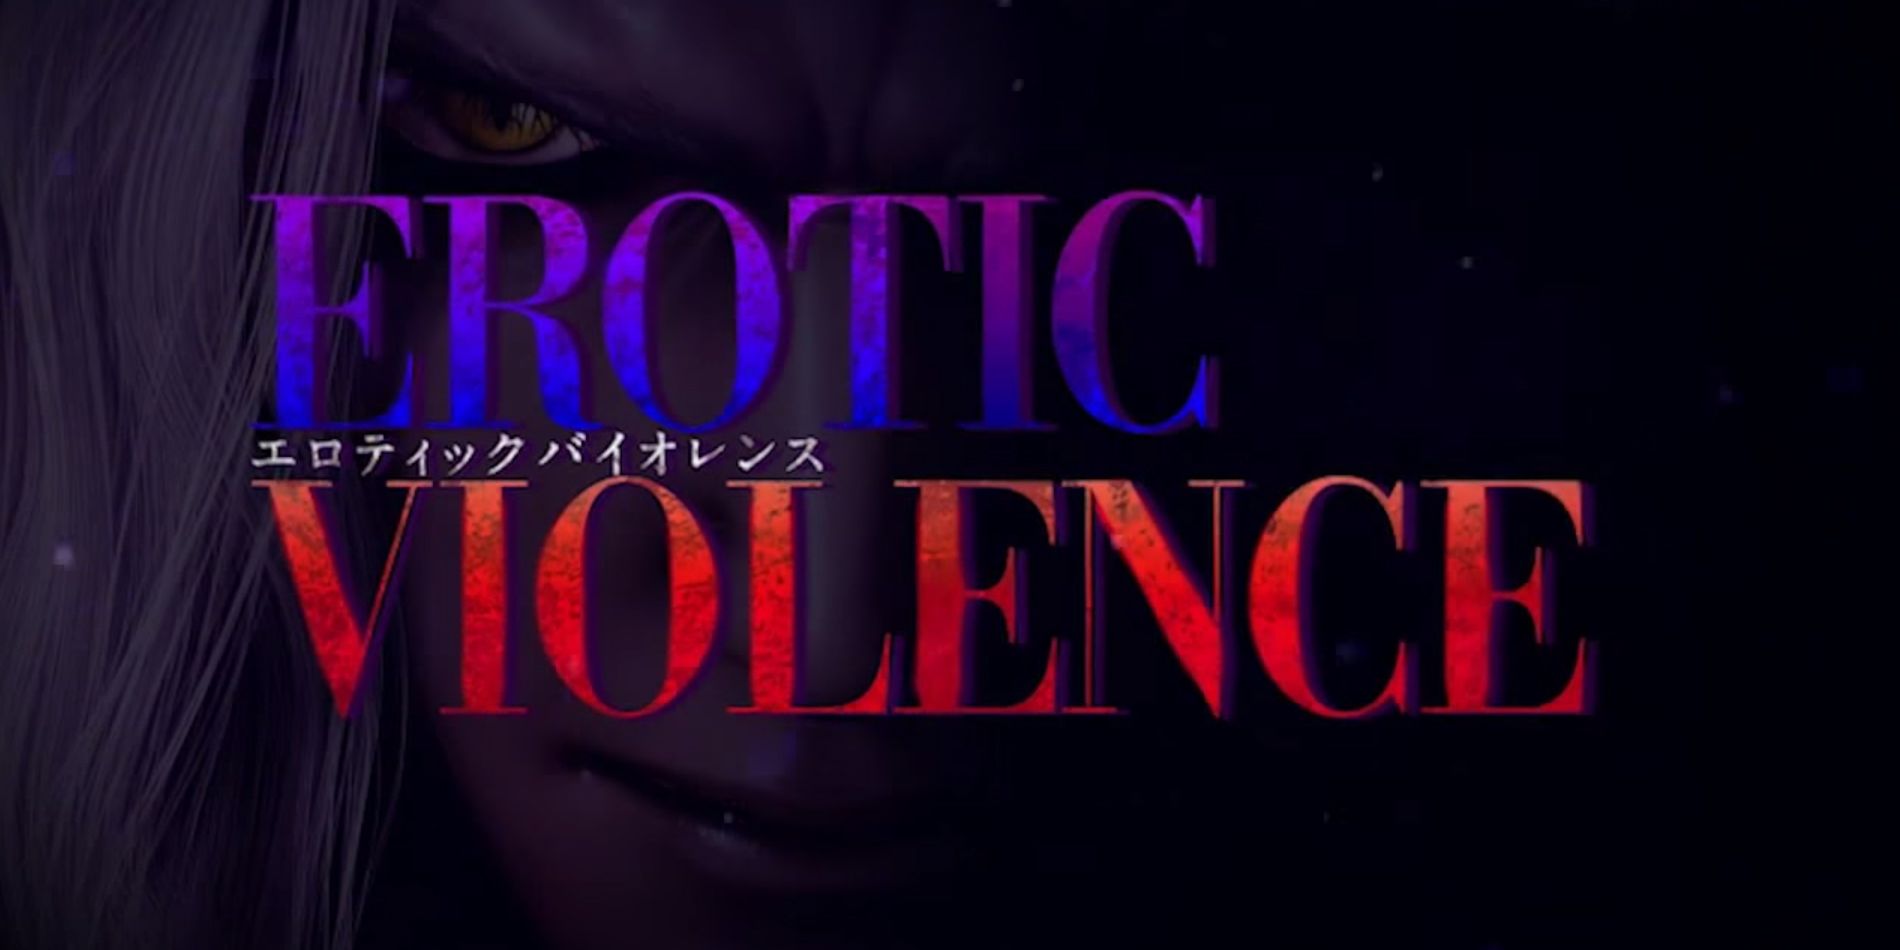 Castlevania Pachinko Erotic Violence